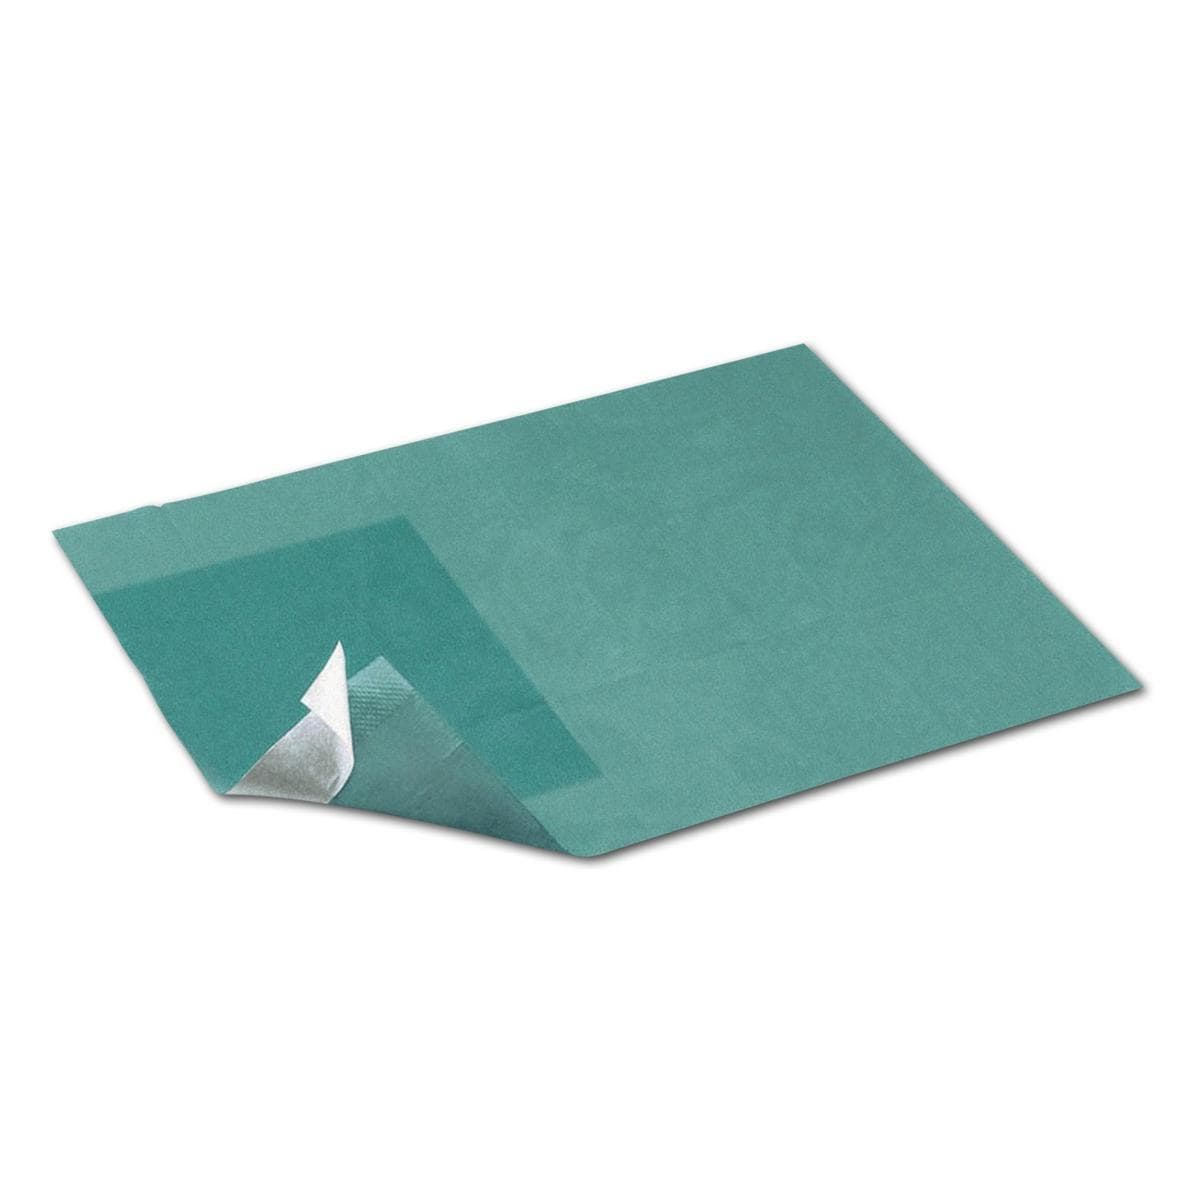 Foliodrape Protect afdekdoek - steriel - 45 x 75cm, 65 stuks